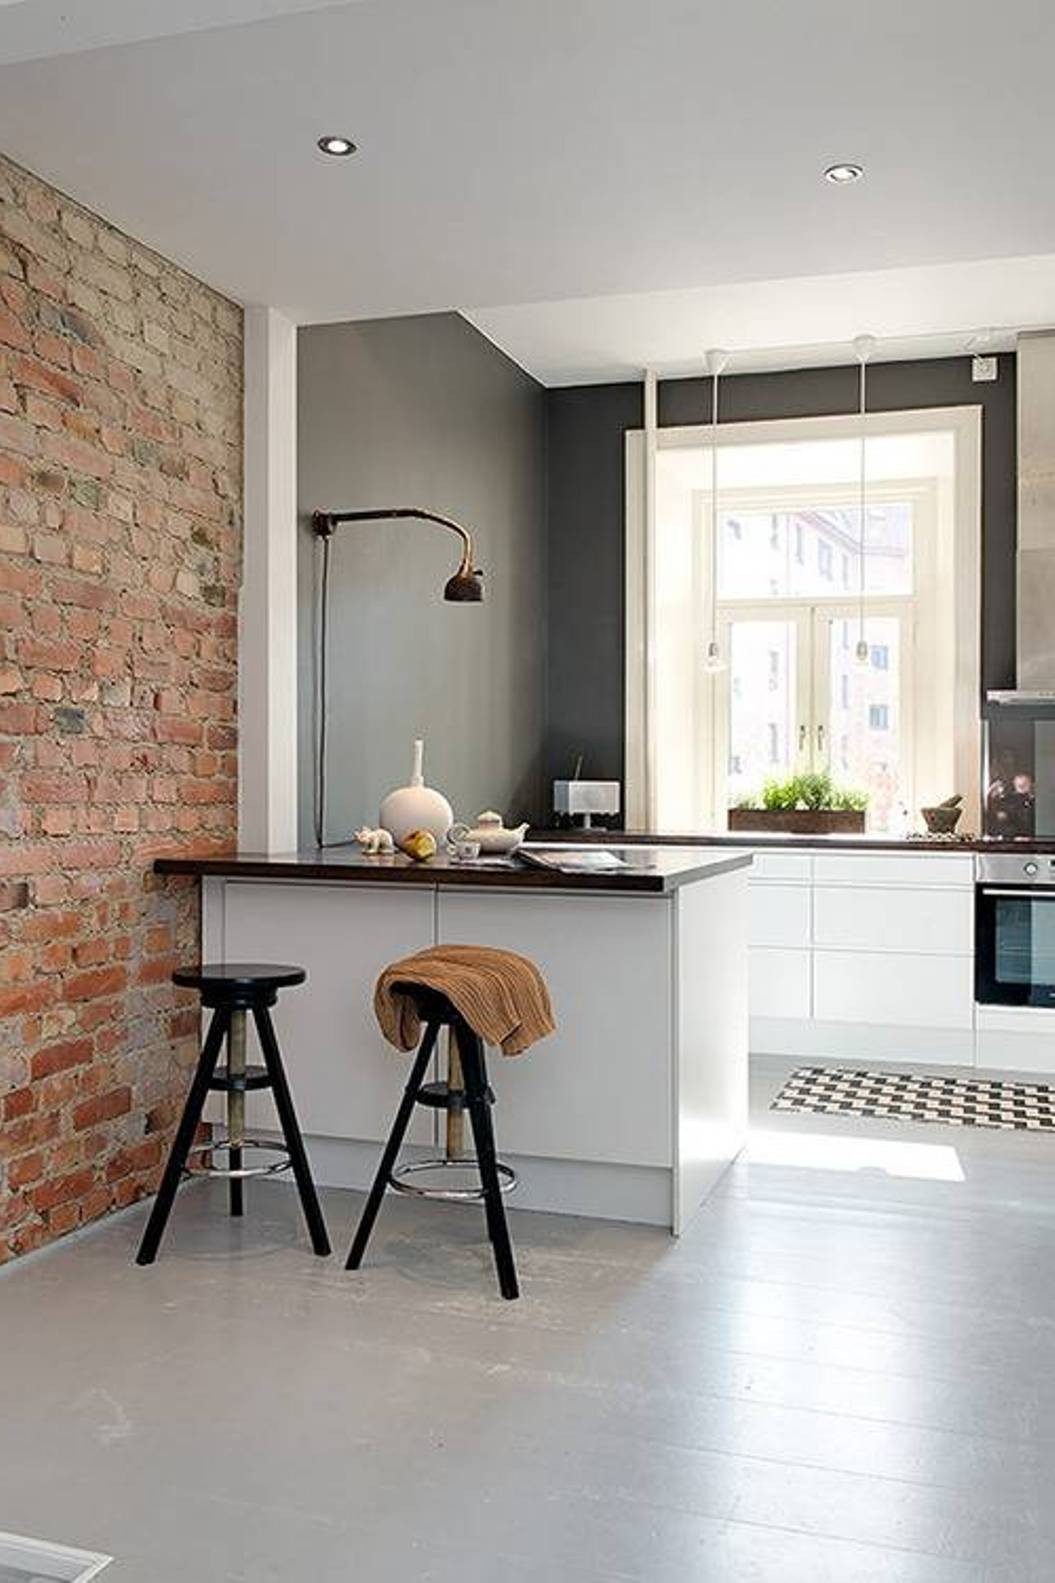 Small Kitchen Designs
 28 Small Kitchen Design Ideas – The WoW Style